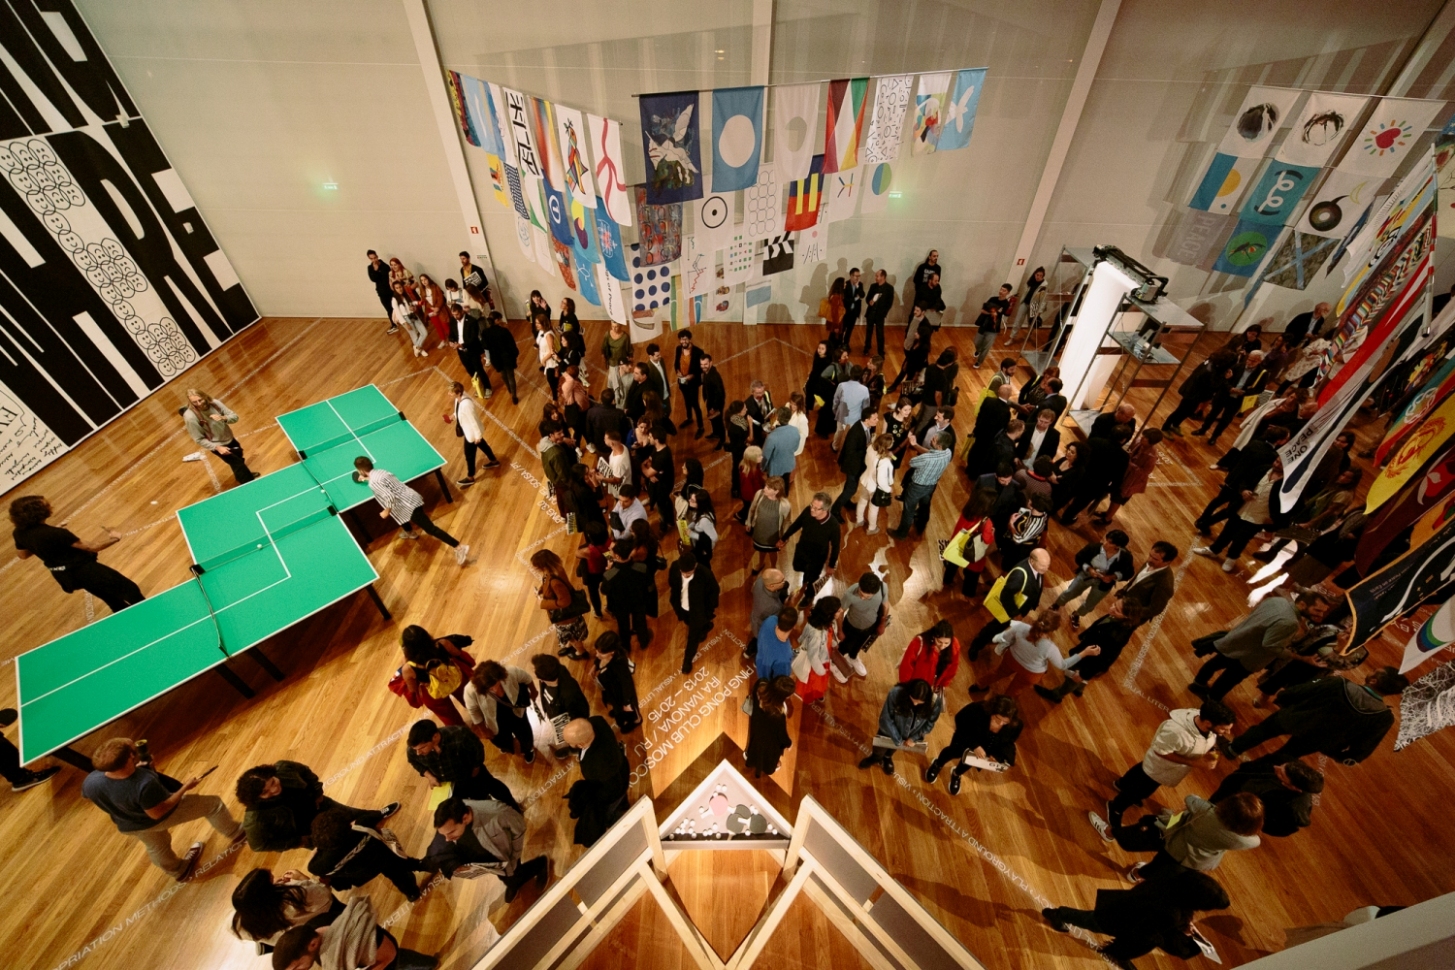 Galeria Municipal do Porto - Exhibition centers & art galleries